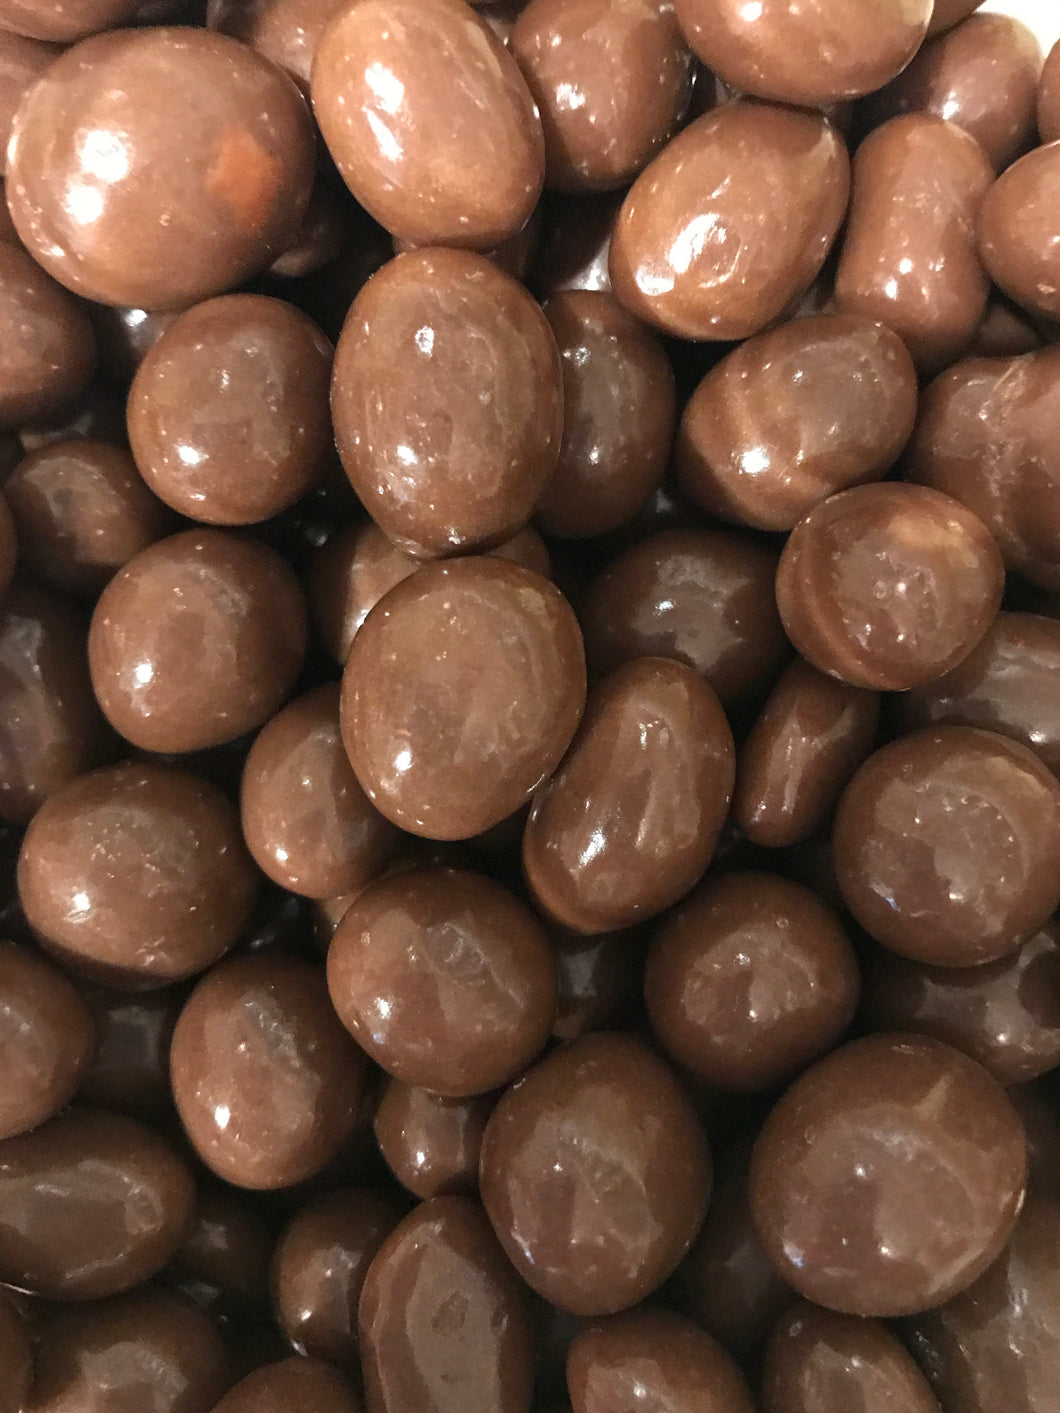 Chocolate peanuts